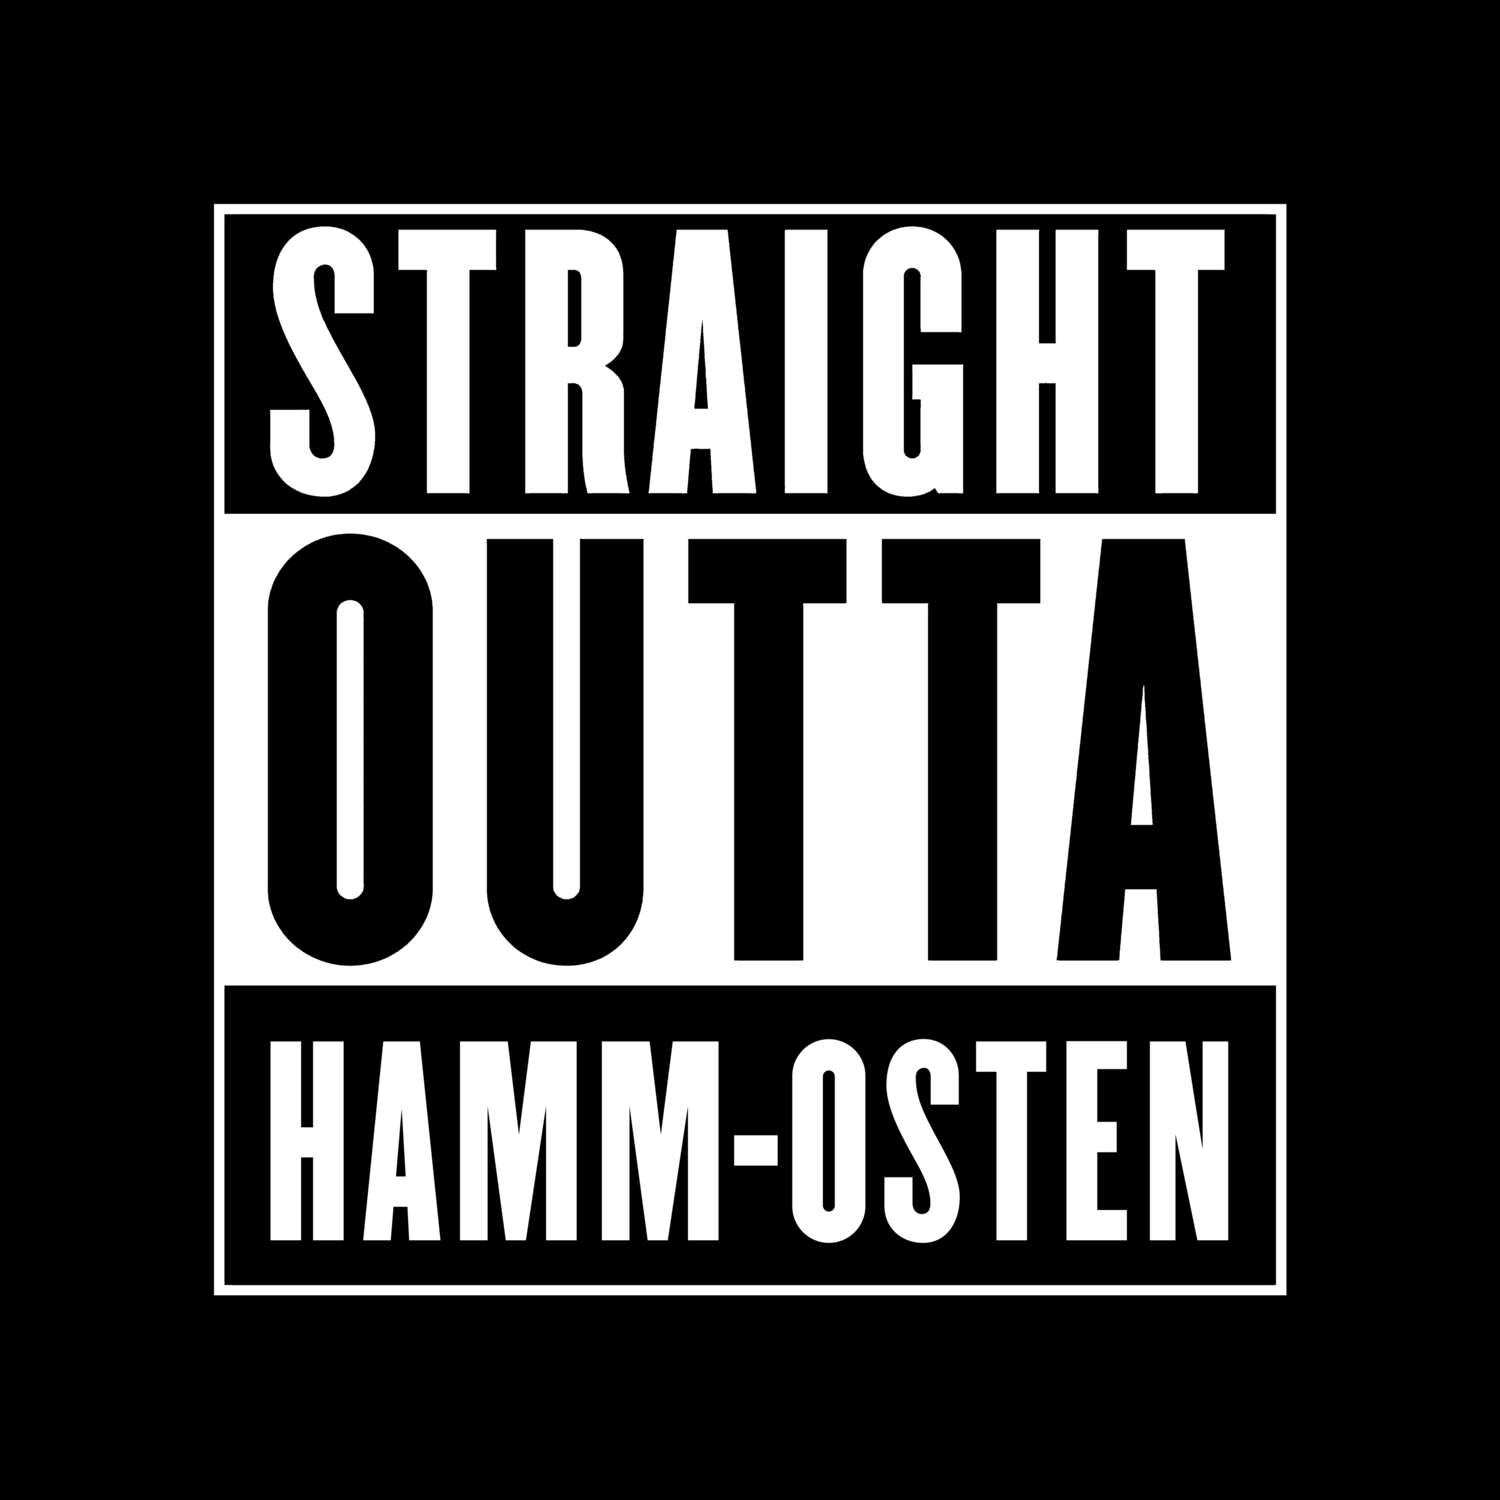 Hamm-Osten T-Shirt »Straight Outta«